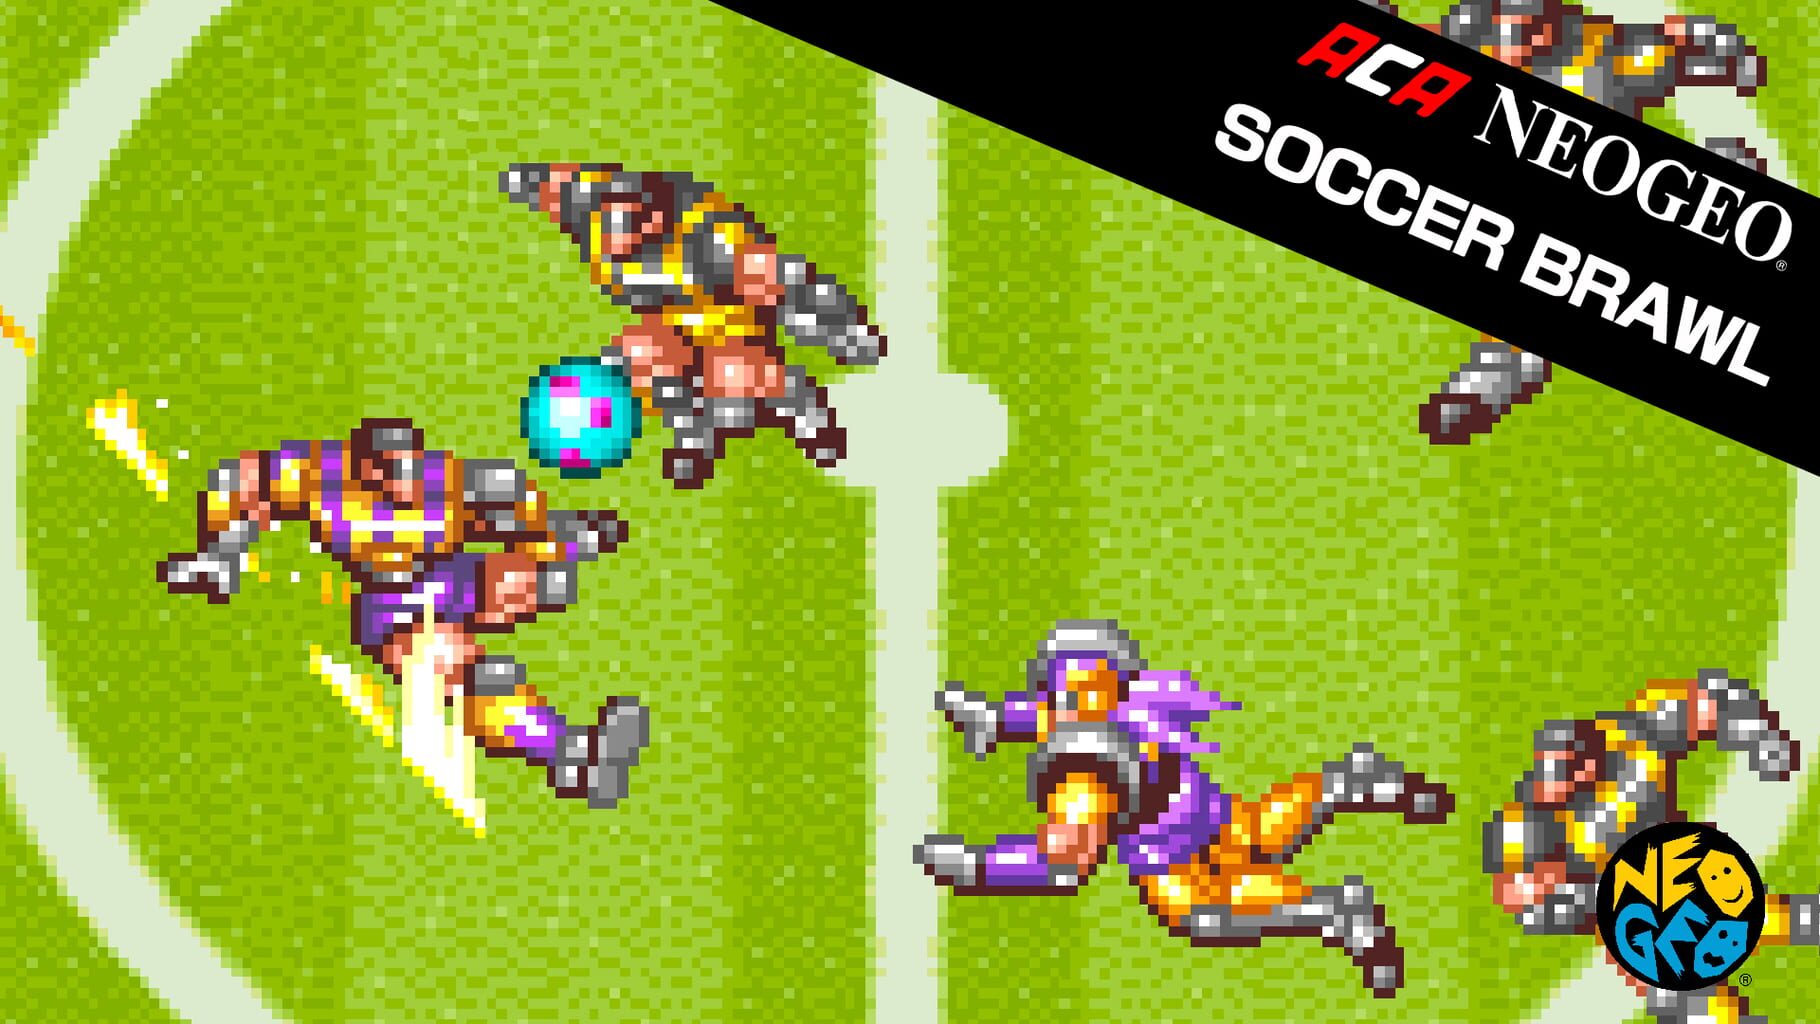 Arte - ACA Neo Geo: Soccer Brawl